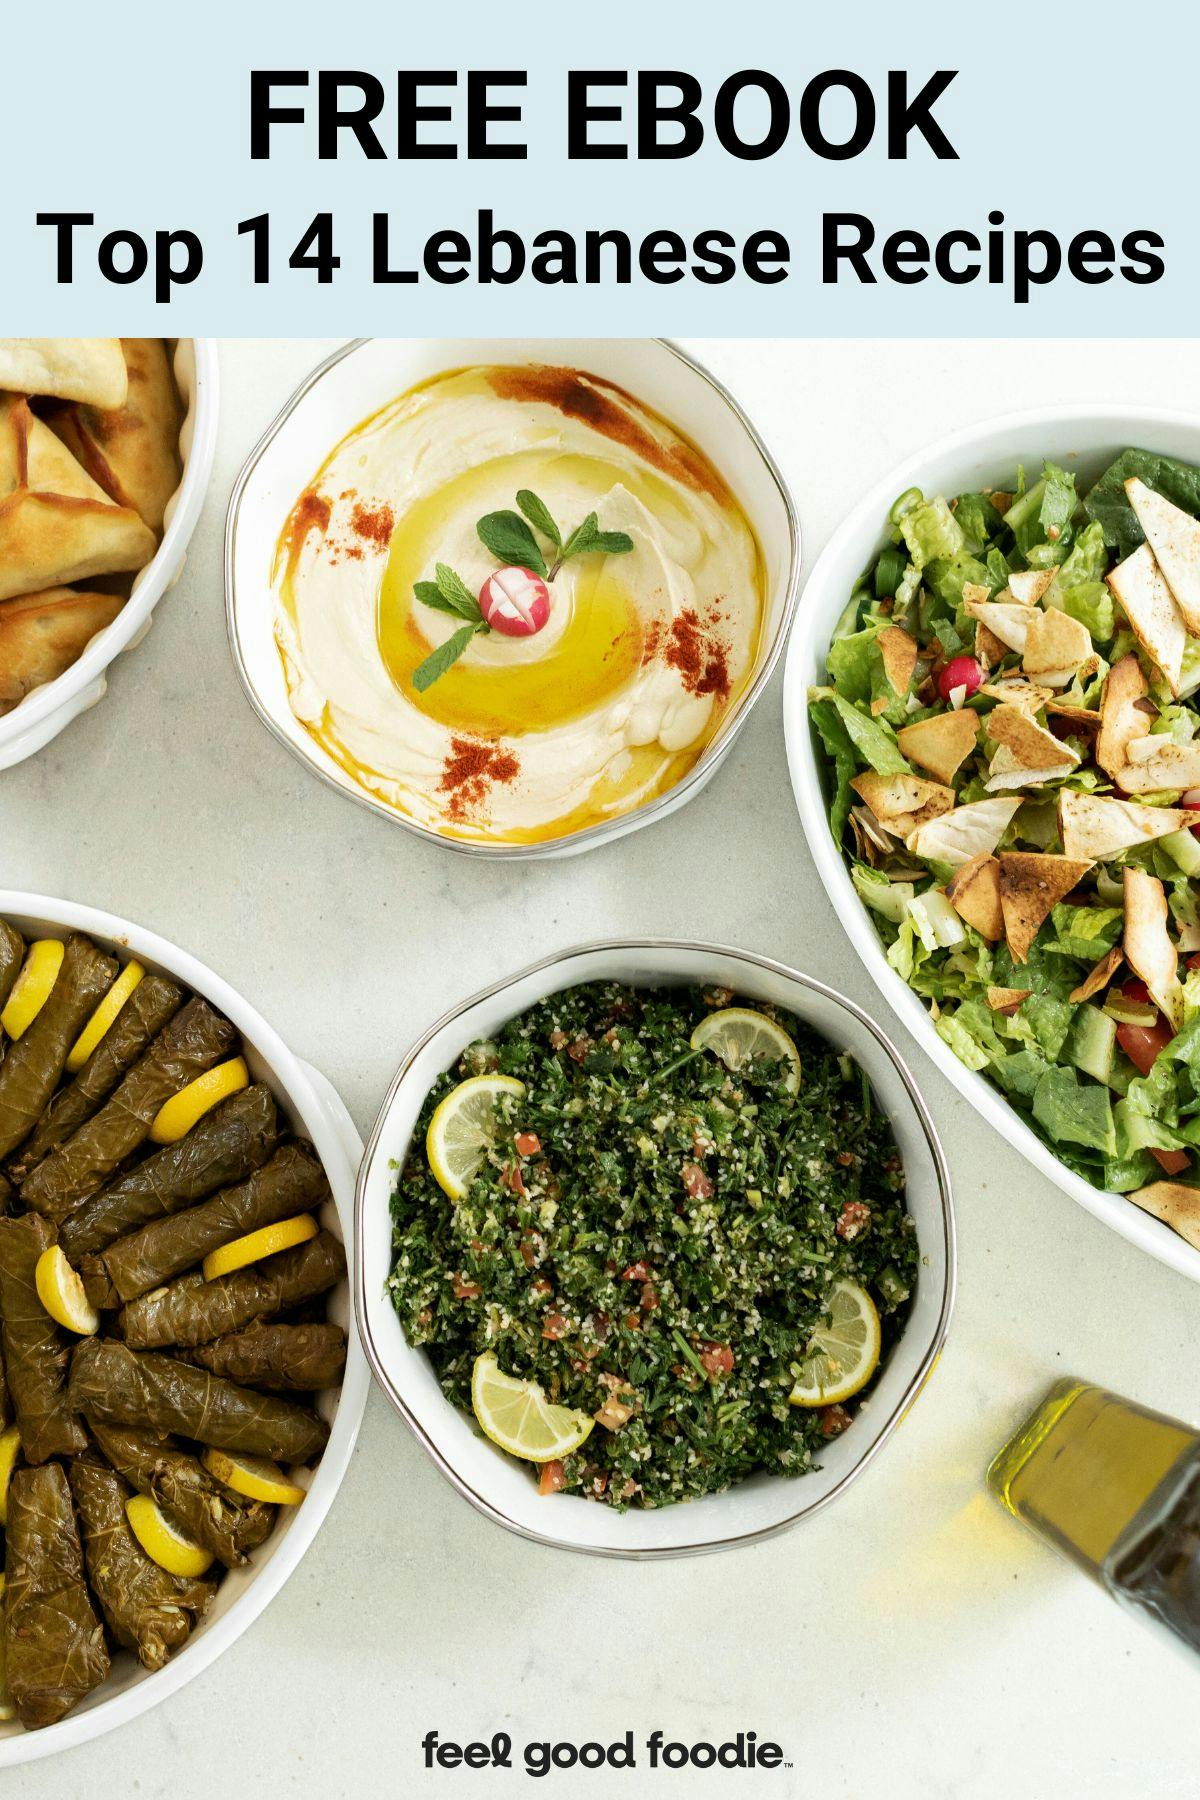 Free Ebook Top 14 Lebanese Recipes